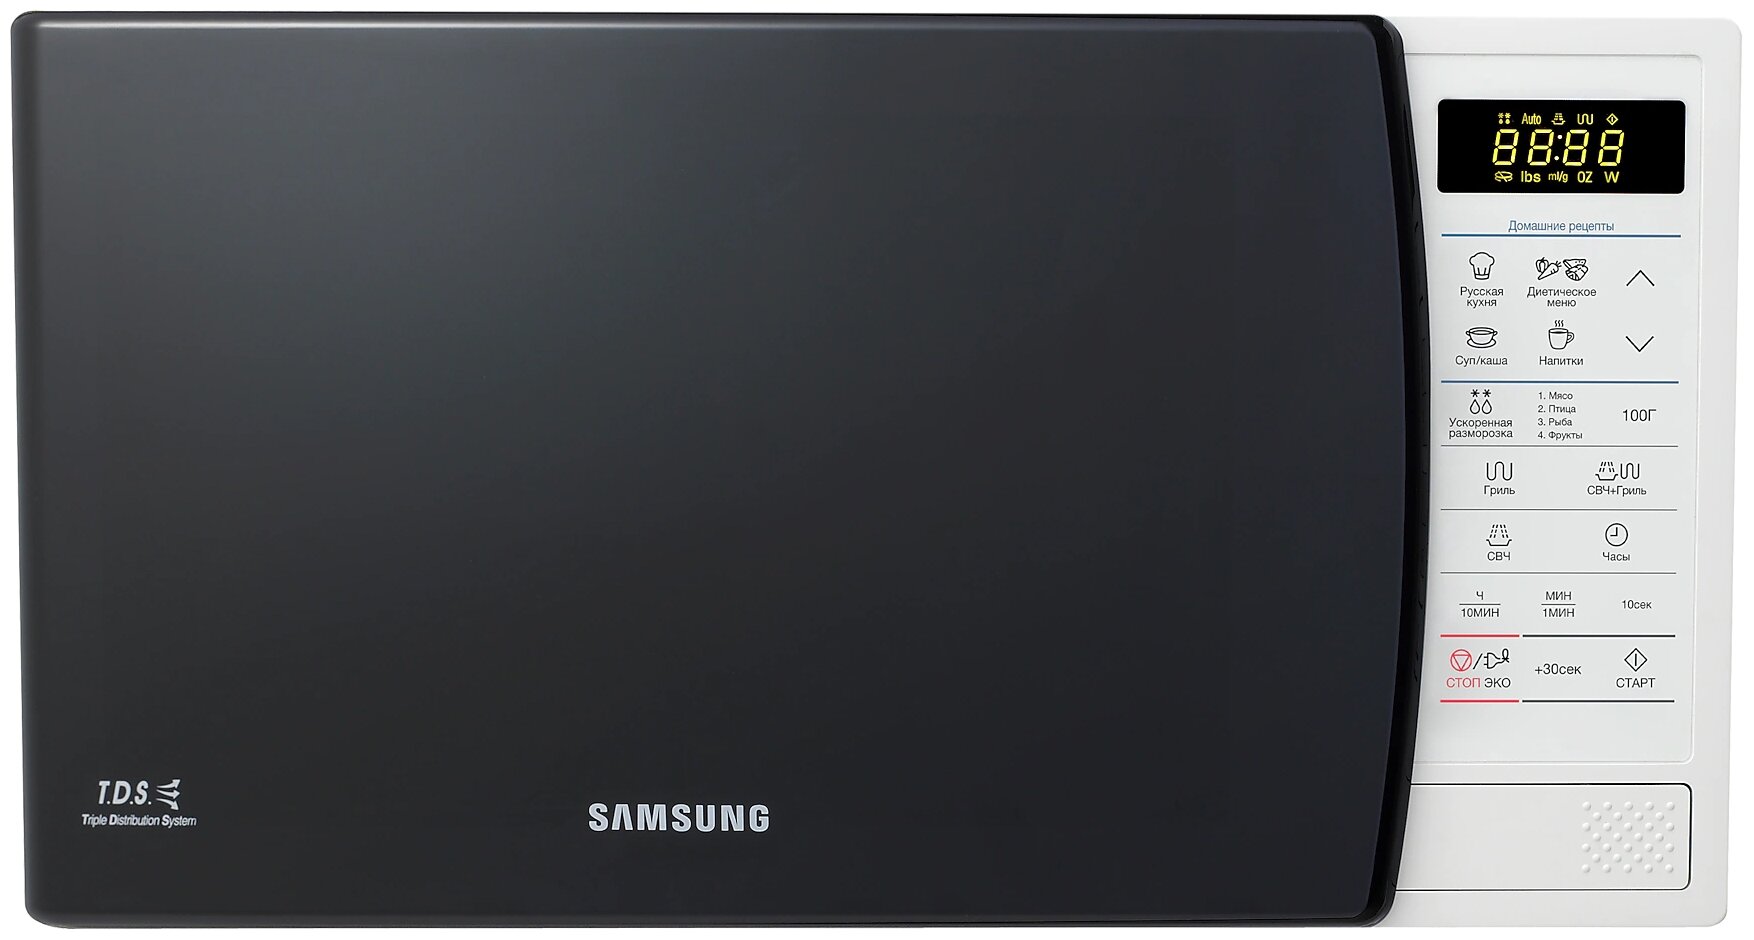 Samsung GE83KRW-1/BW Микроволновая печь white (Объем 23л, мощность 800 Вт, гриль)